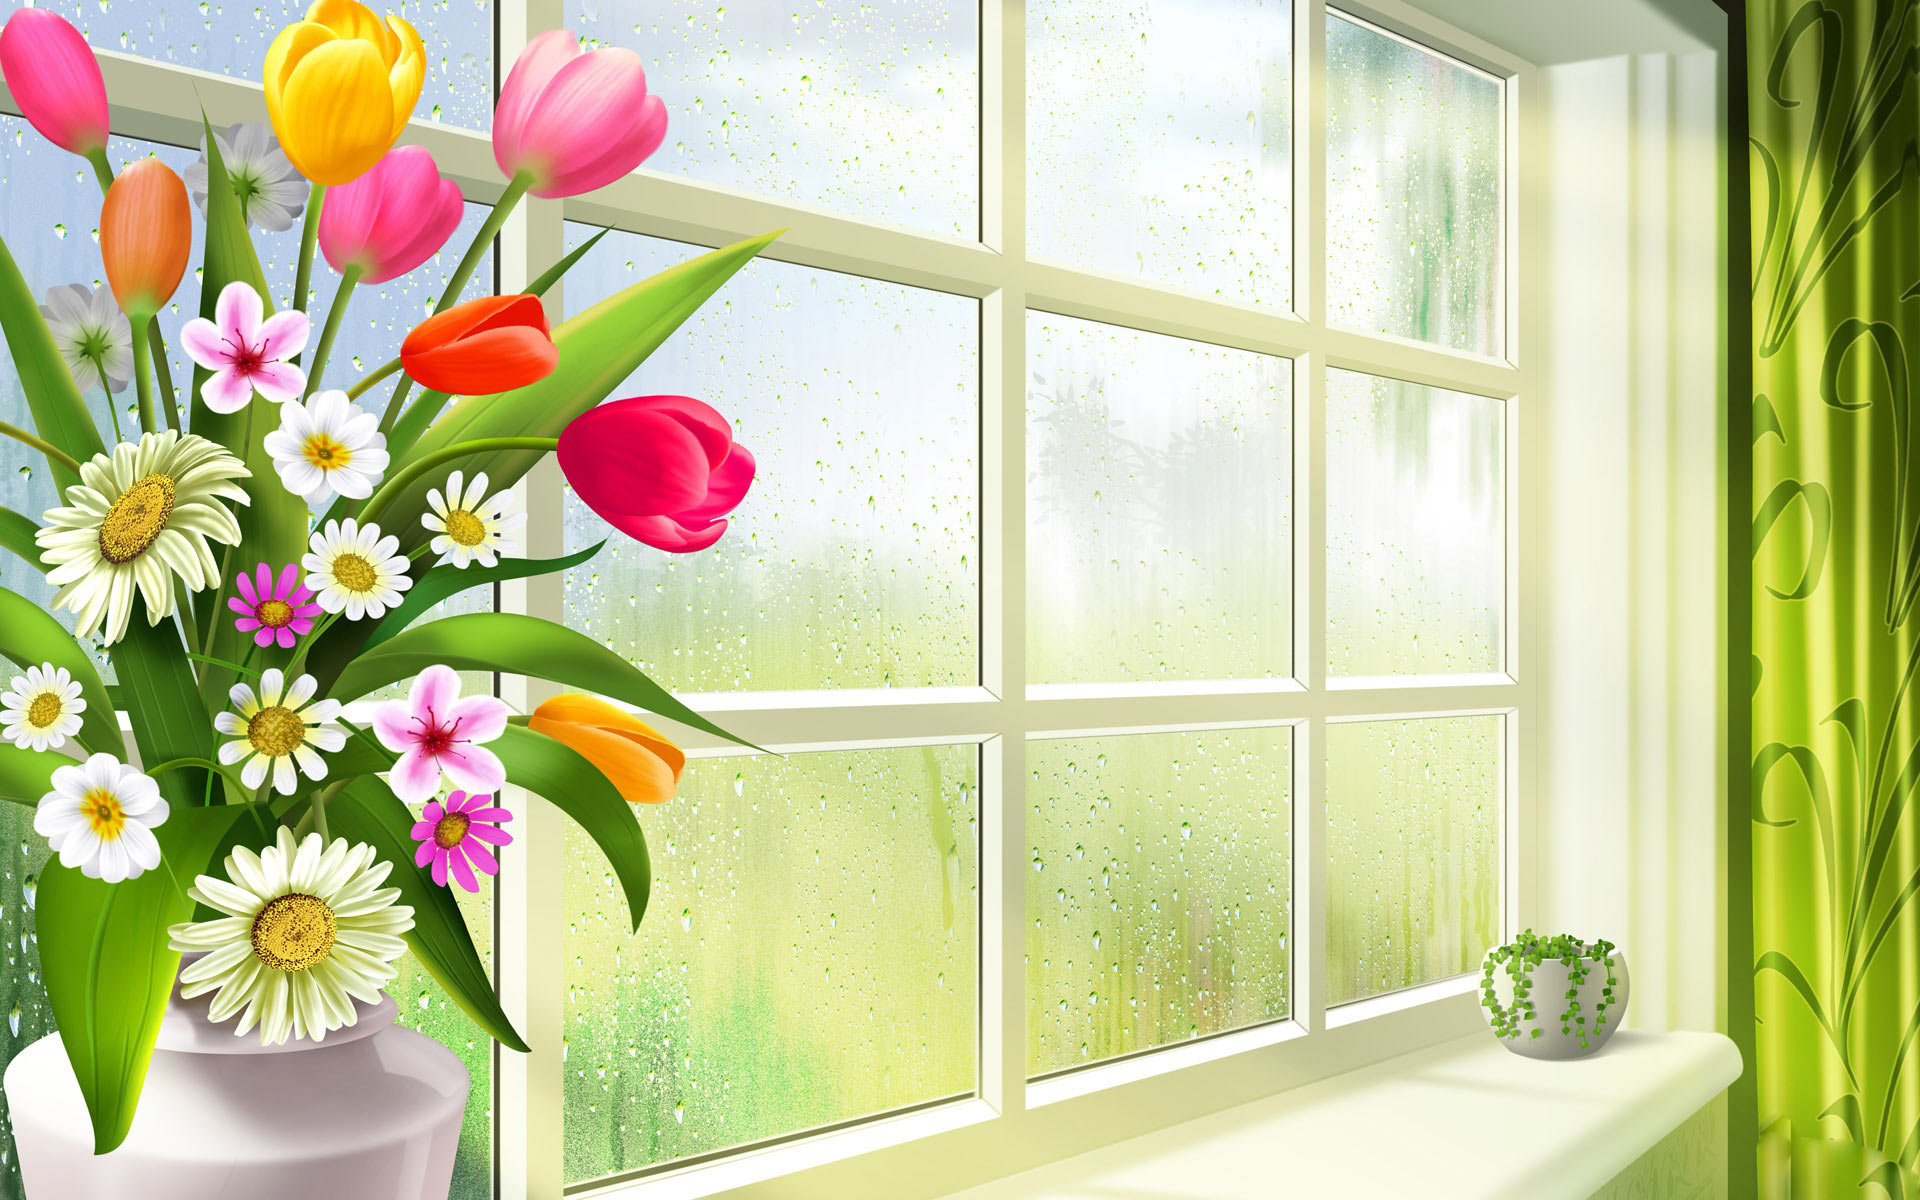 Pretty Spring Desktop Backgrounds   HD Wallpapers